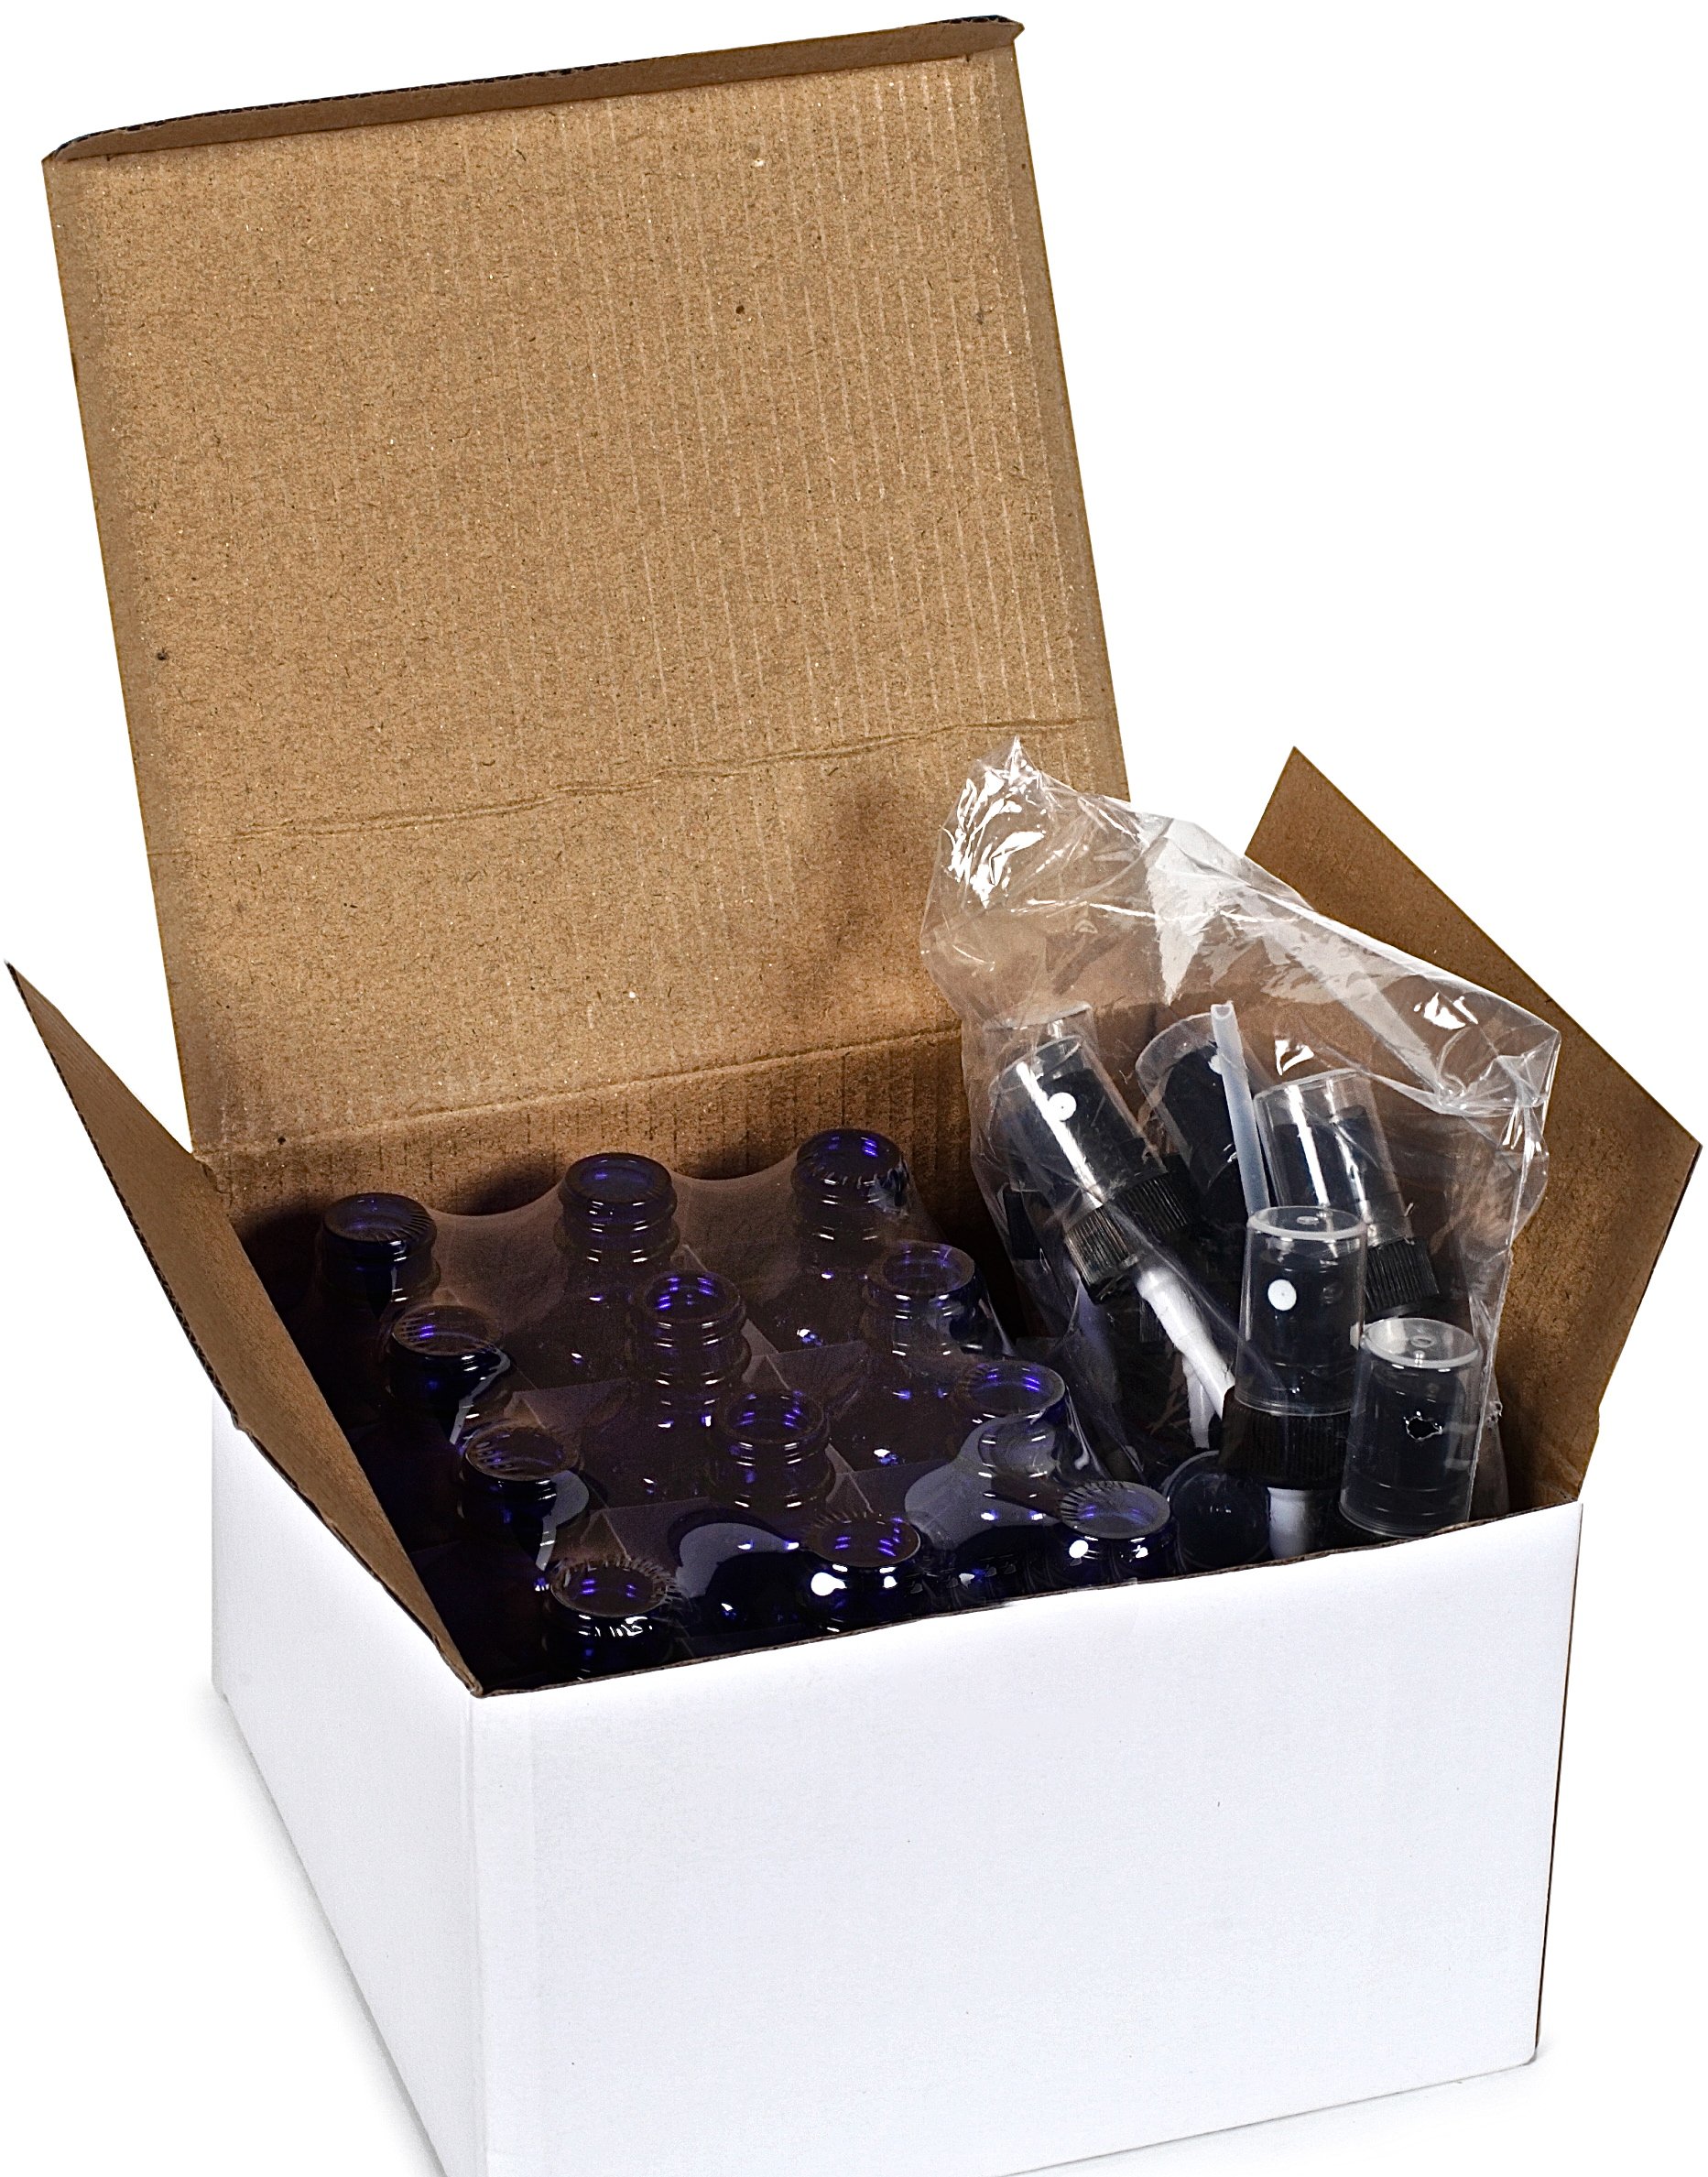 Vivaplex 2 oz Glass Bottles, with Black Fine Mist Sprayers, Cobalt Blue, 12-Count